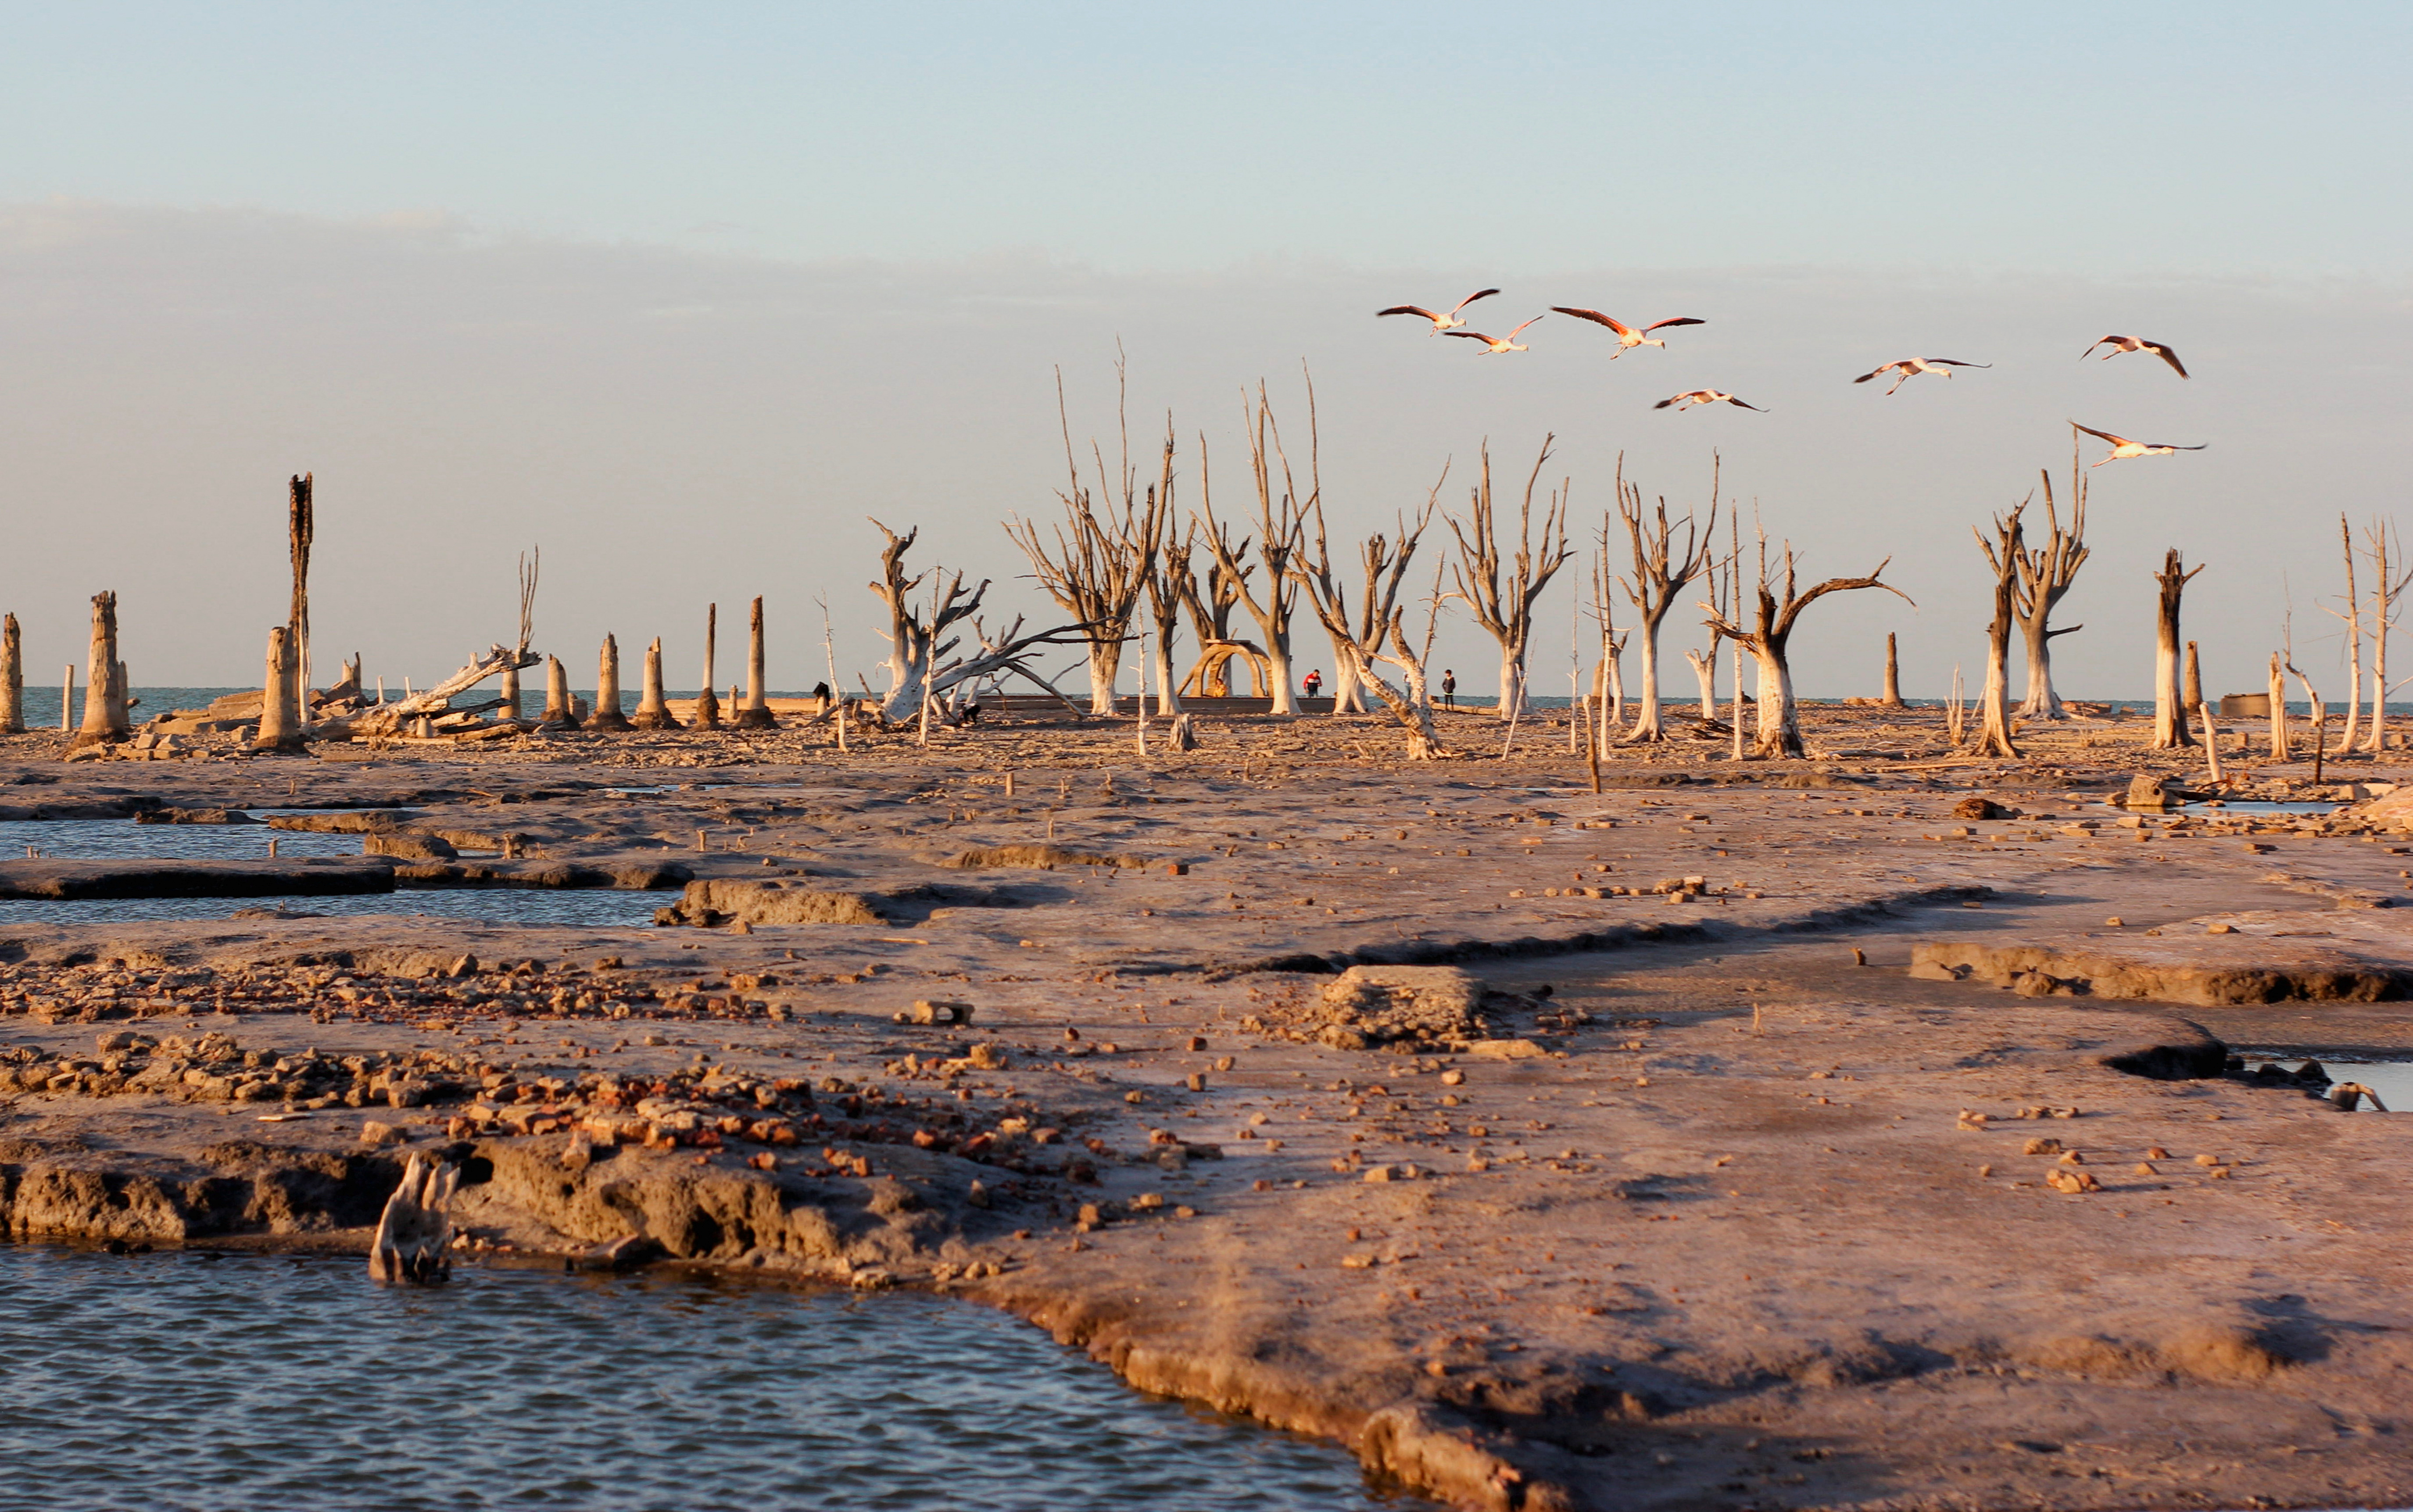 Argentina's severe drought affects landscapes